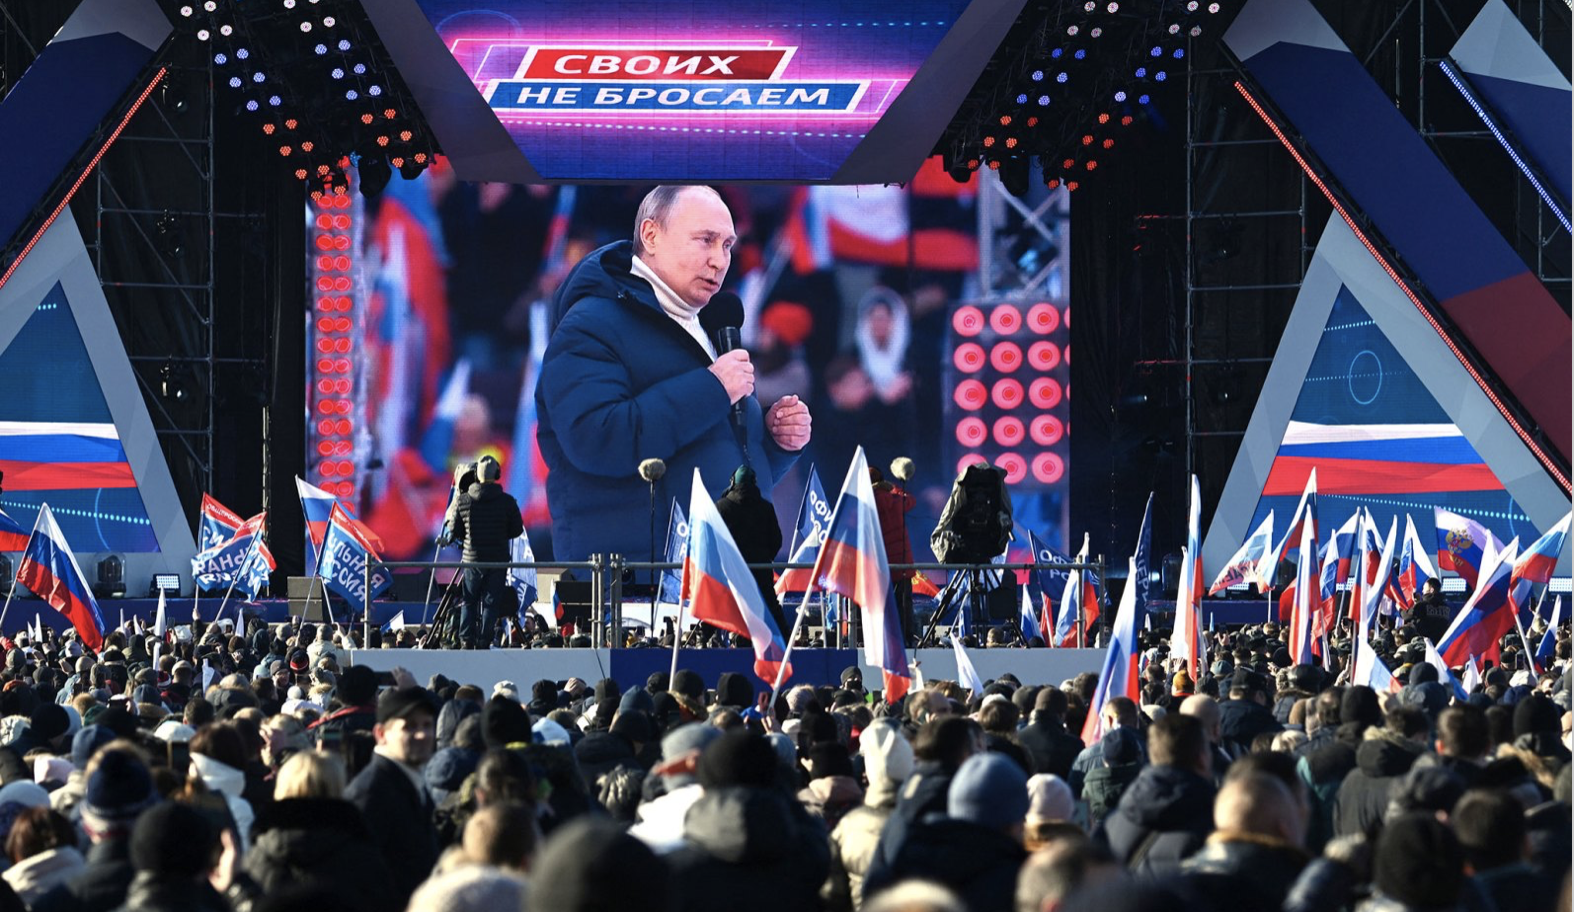 Putin speech video at anniversary celebration